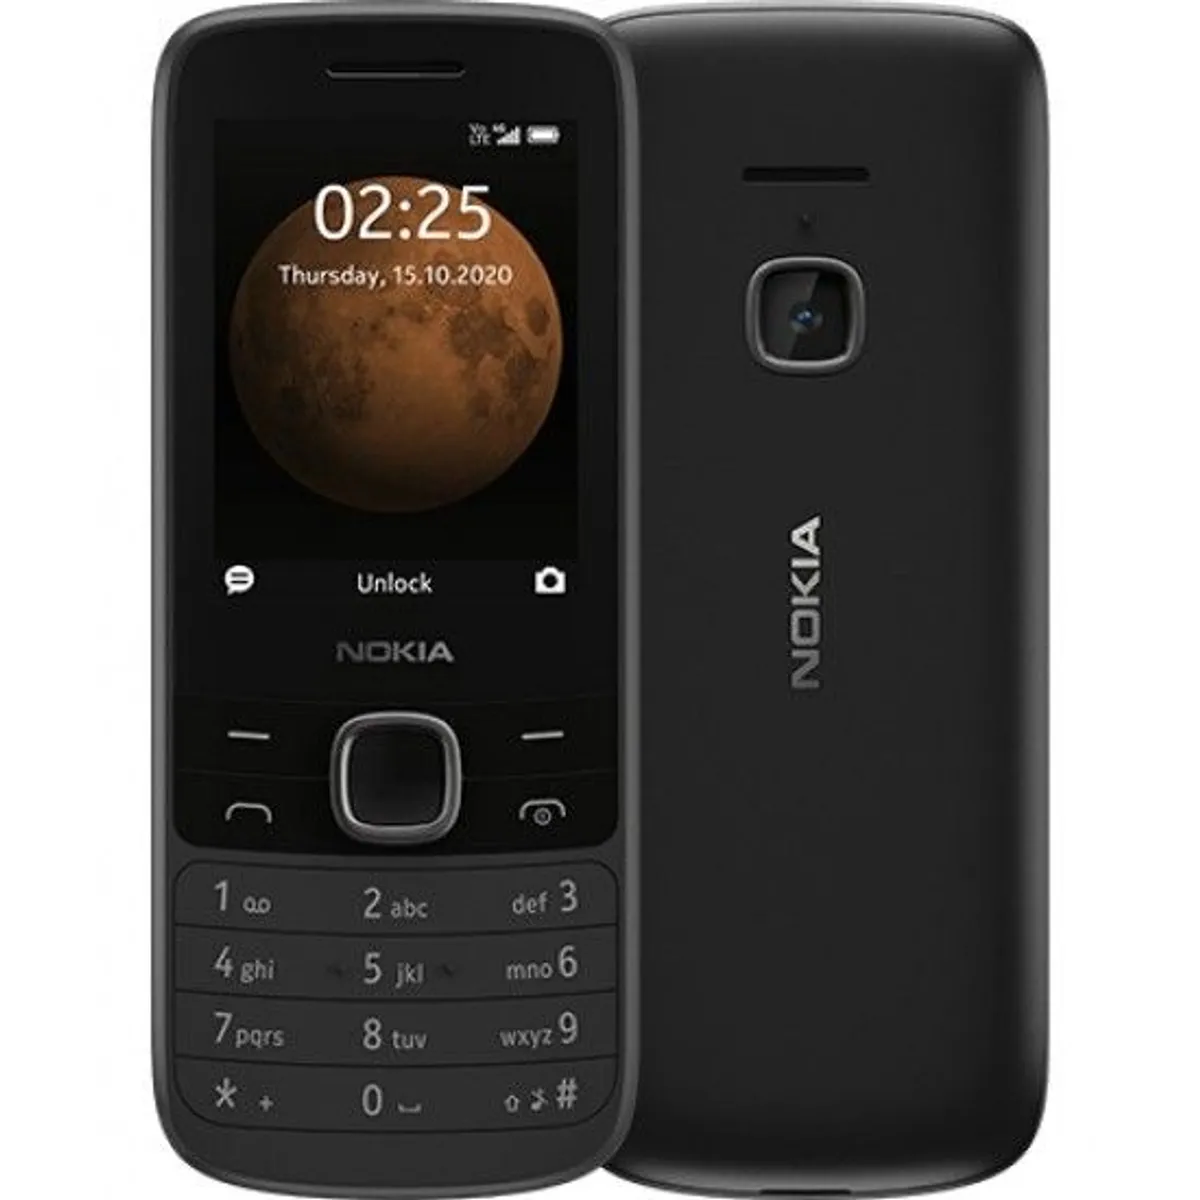 Nokia 225 Dual SIM Unlocked Phones - Black